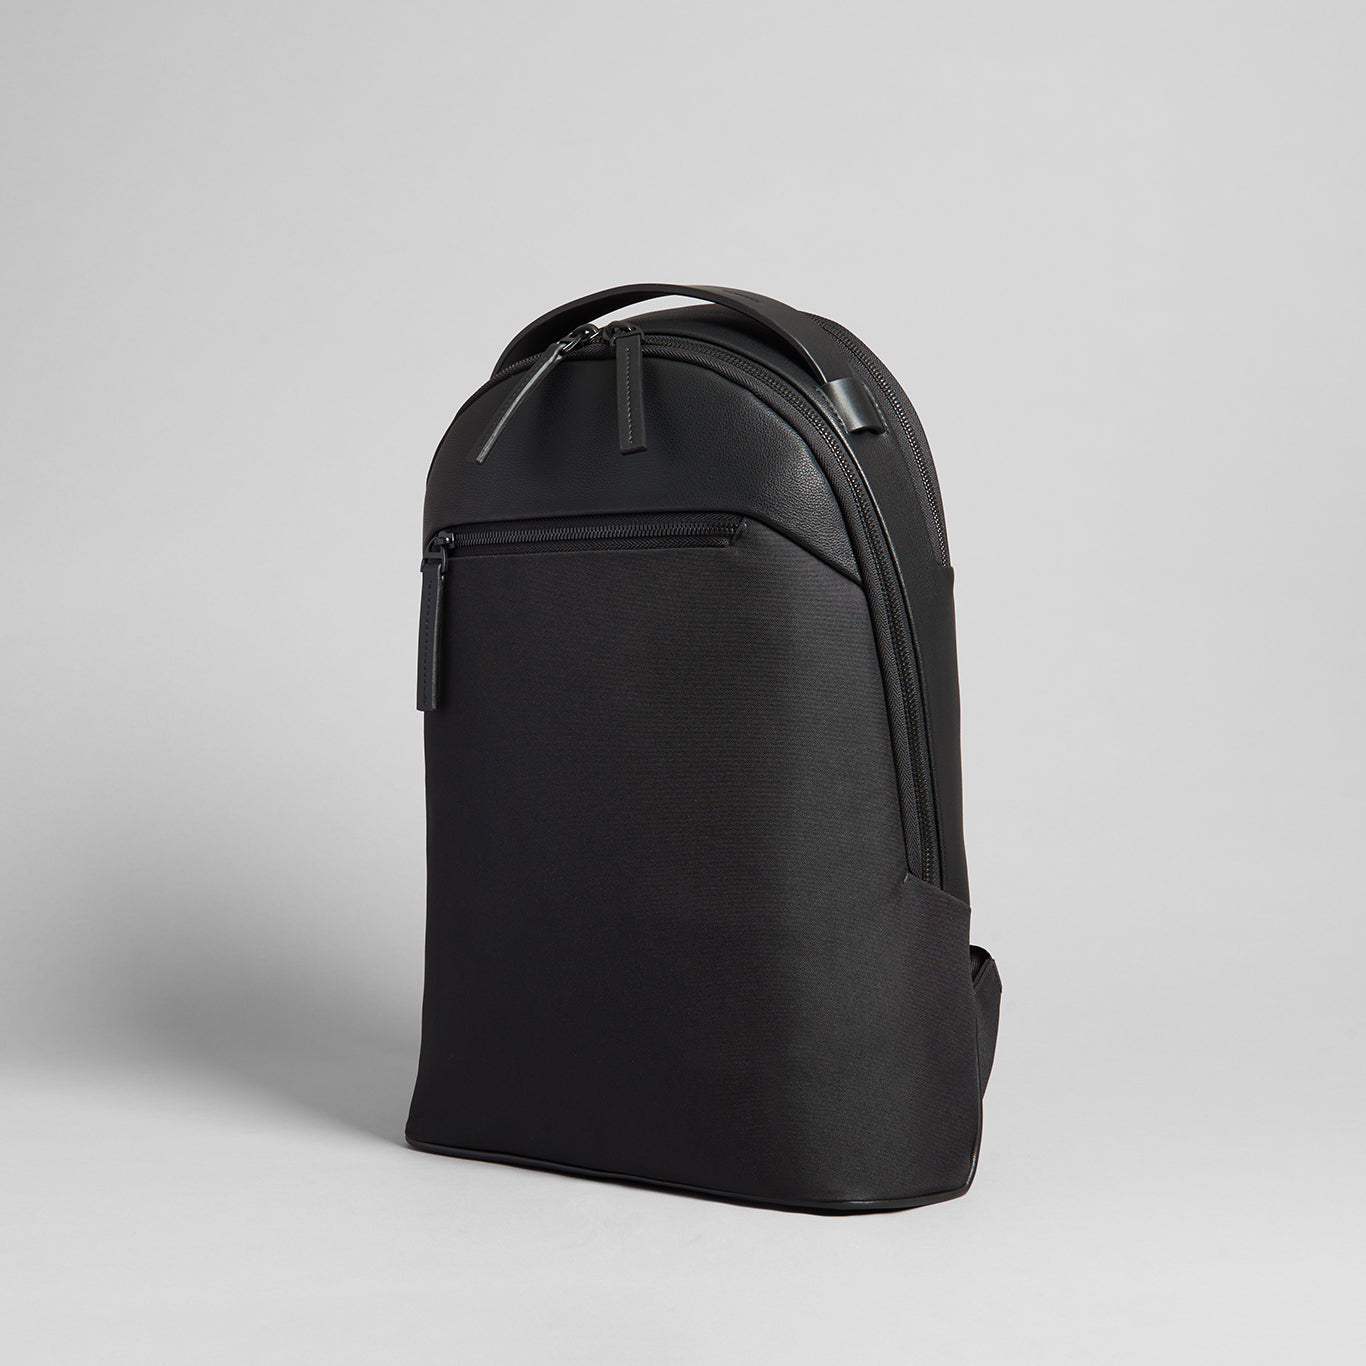 The Met Leather Backpack in Black